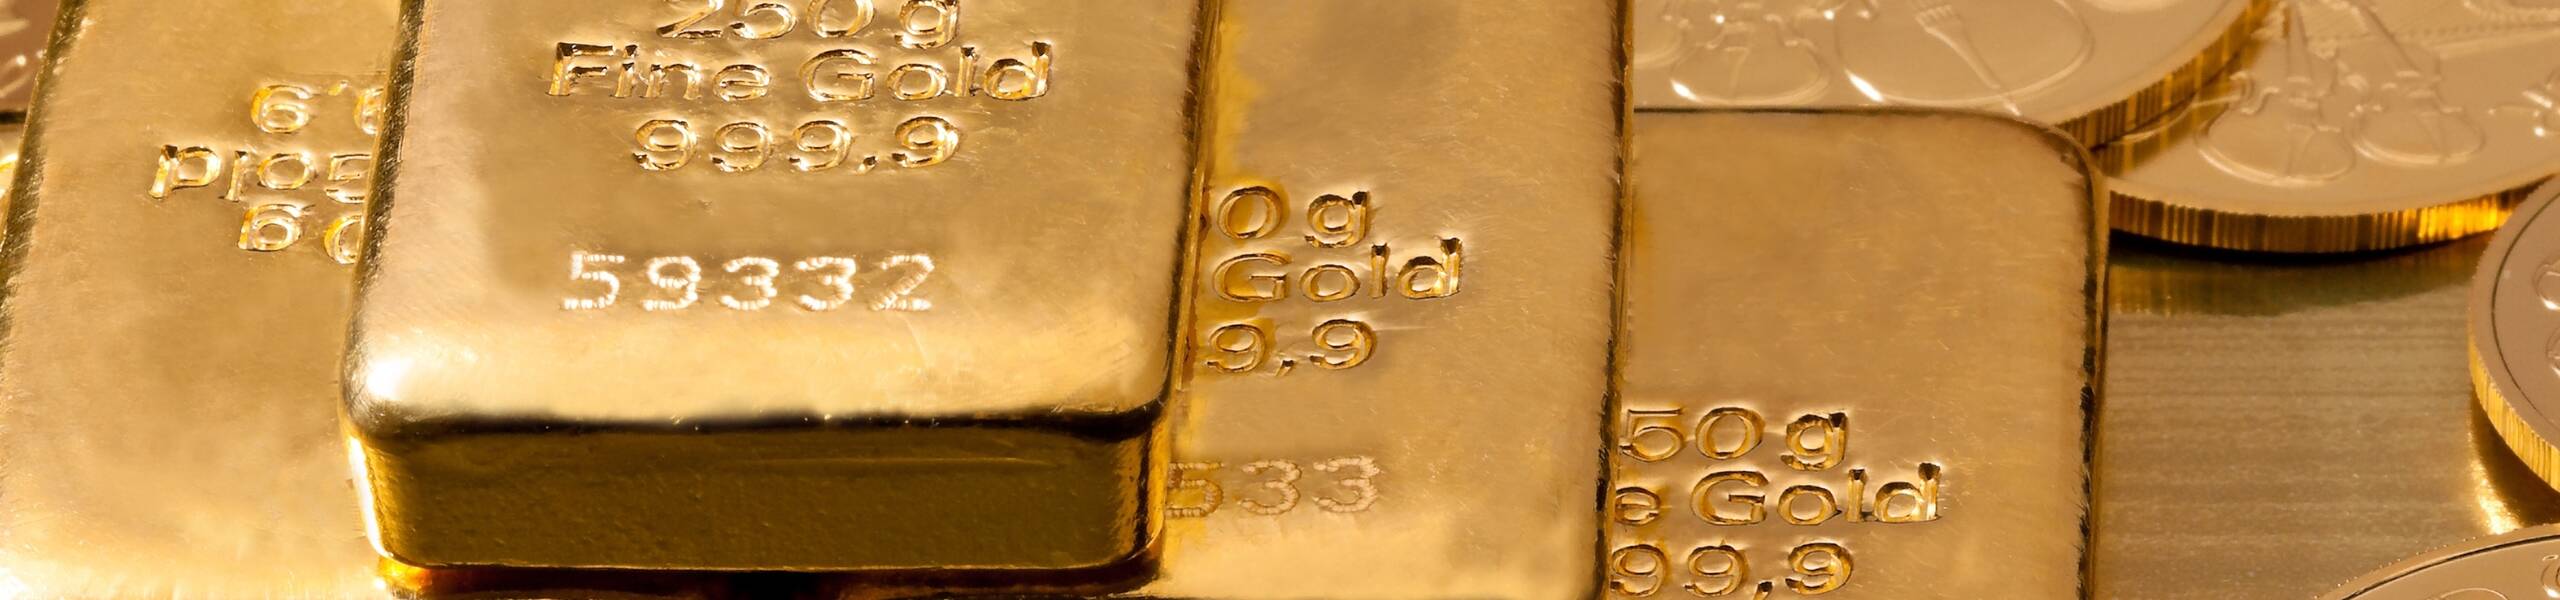 GOLD: market to achieve 89 Moving Average